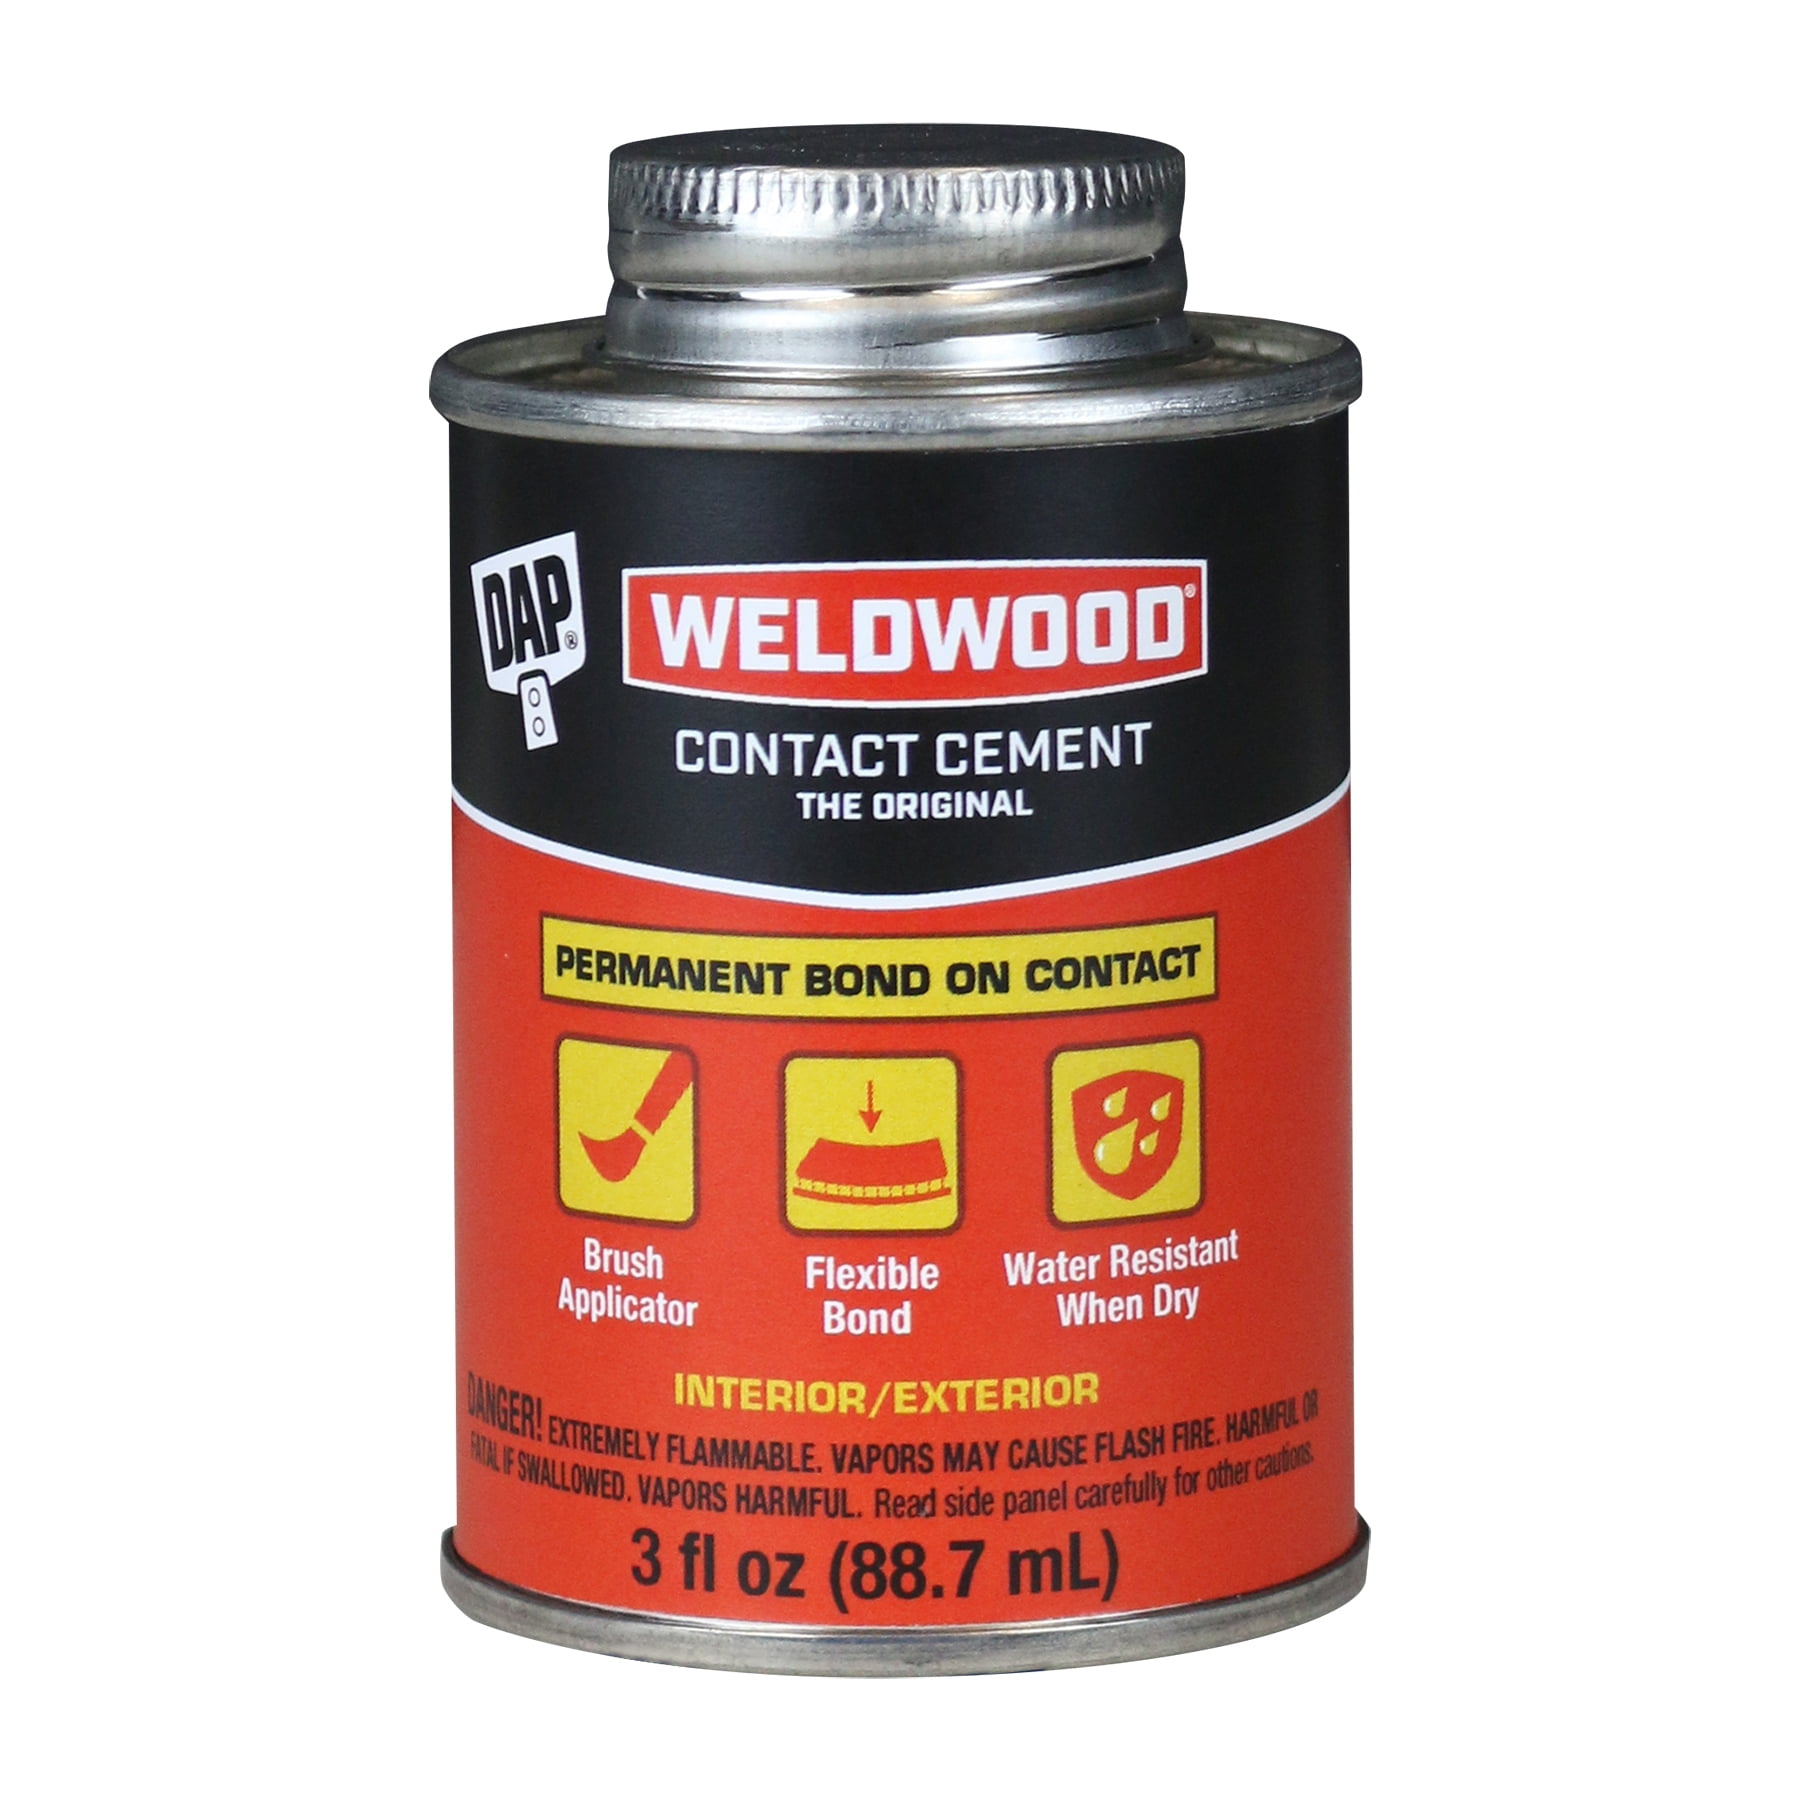 DAP Weldwood Original Contact Cement Adhesive Glue, Neoprene Rubber, Clear, 3 oz.